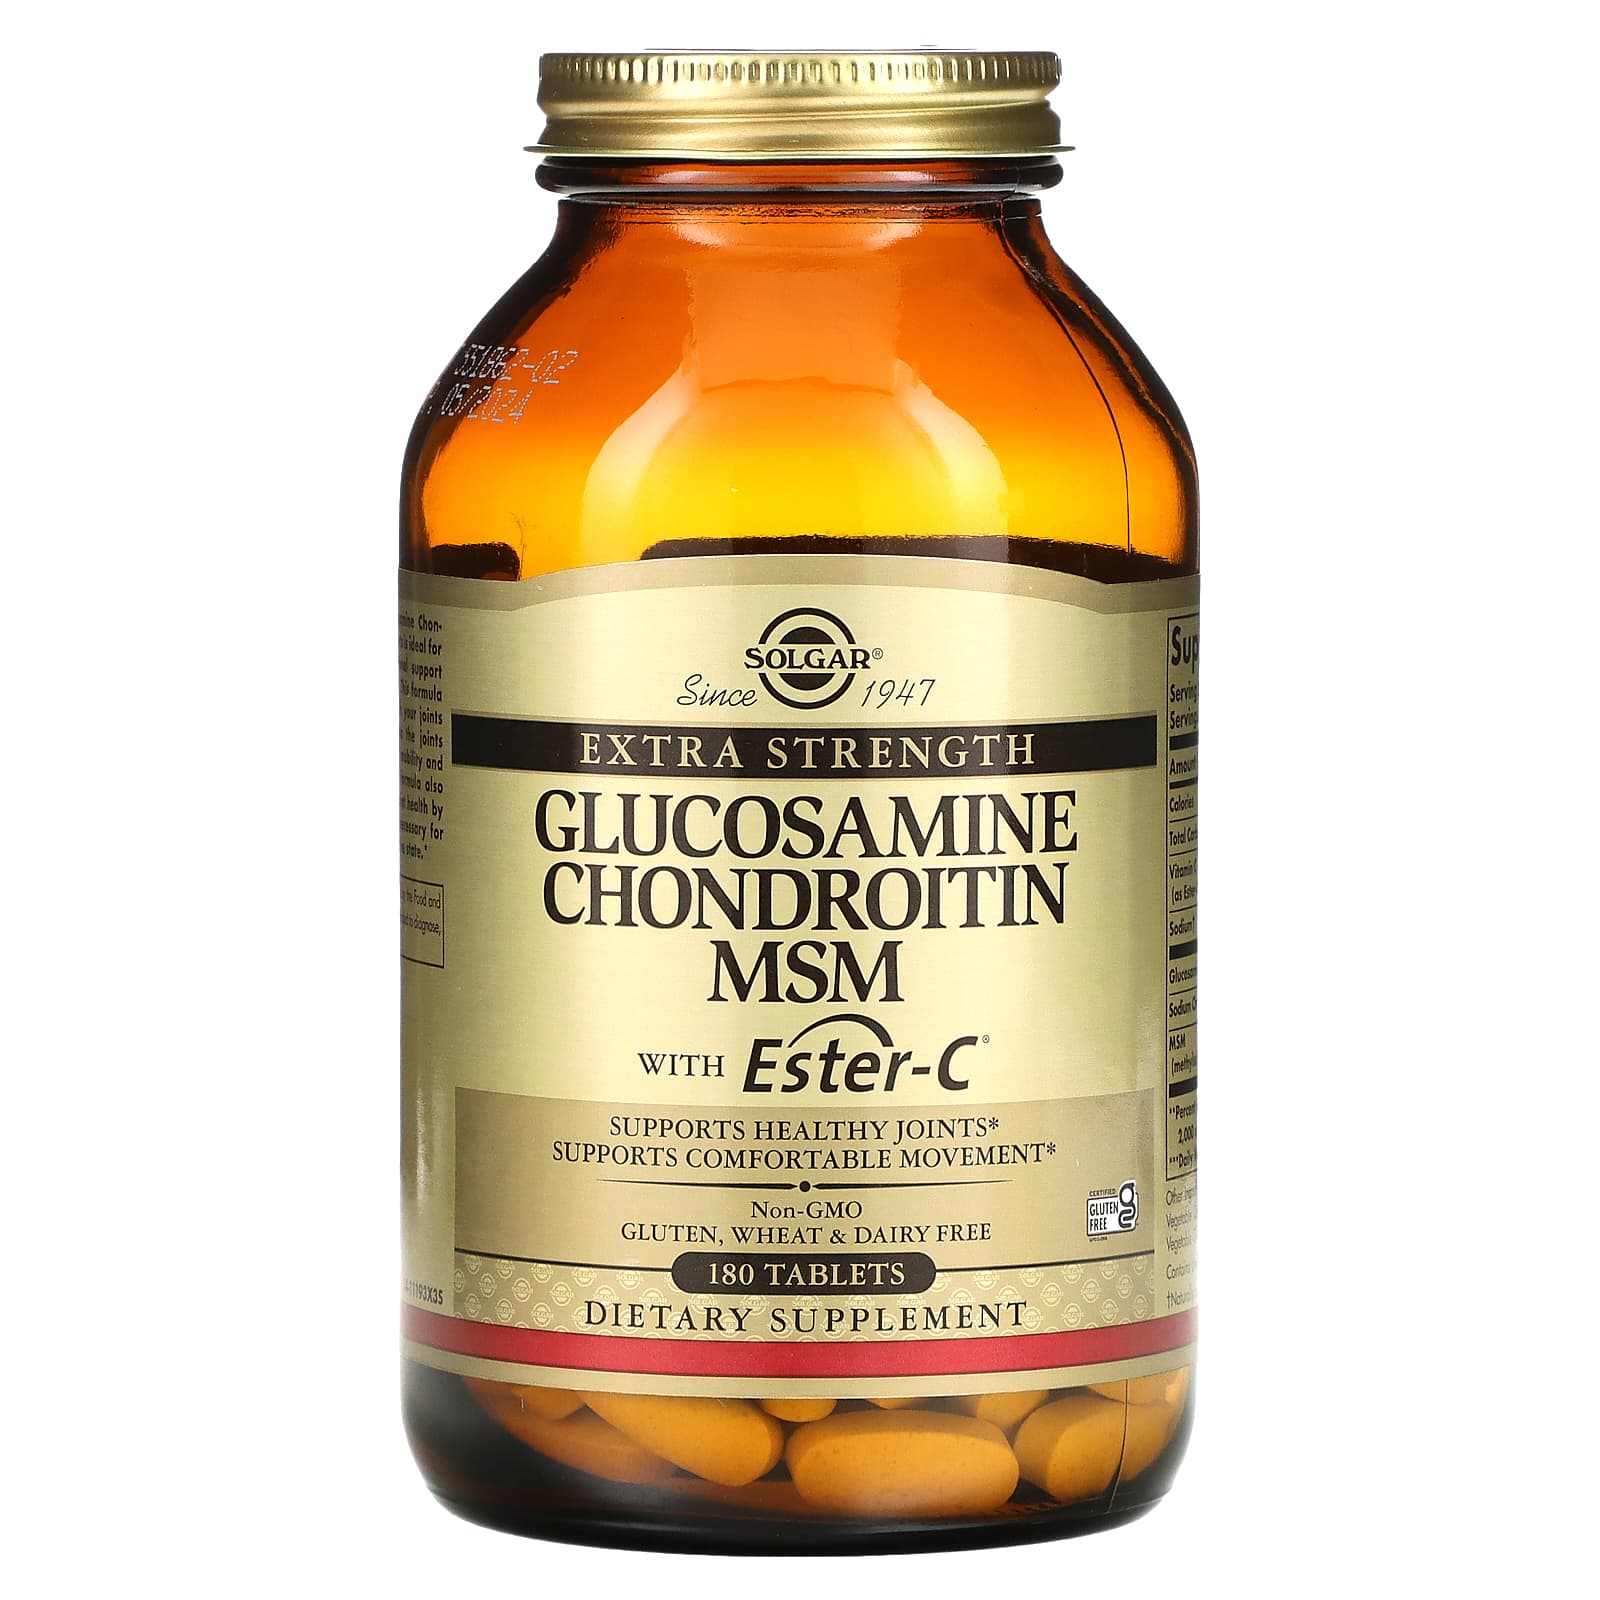 Winkelcentrum duidelijkheid Calligrapher Solgar, Glucosamine Chondroitin MSM with Ester-C, 180 Tablets